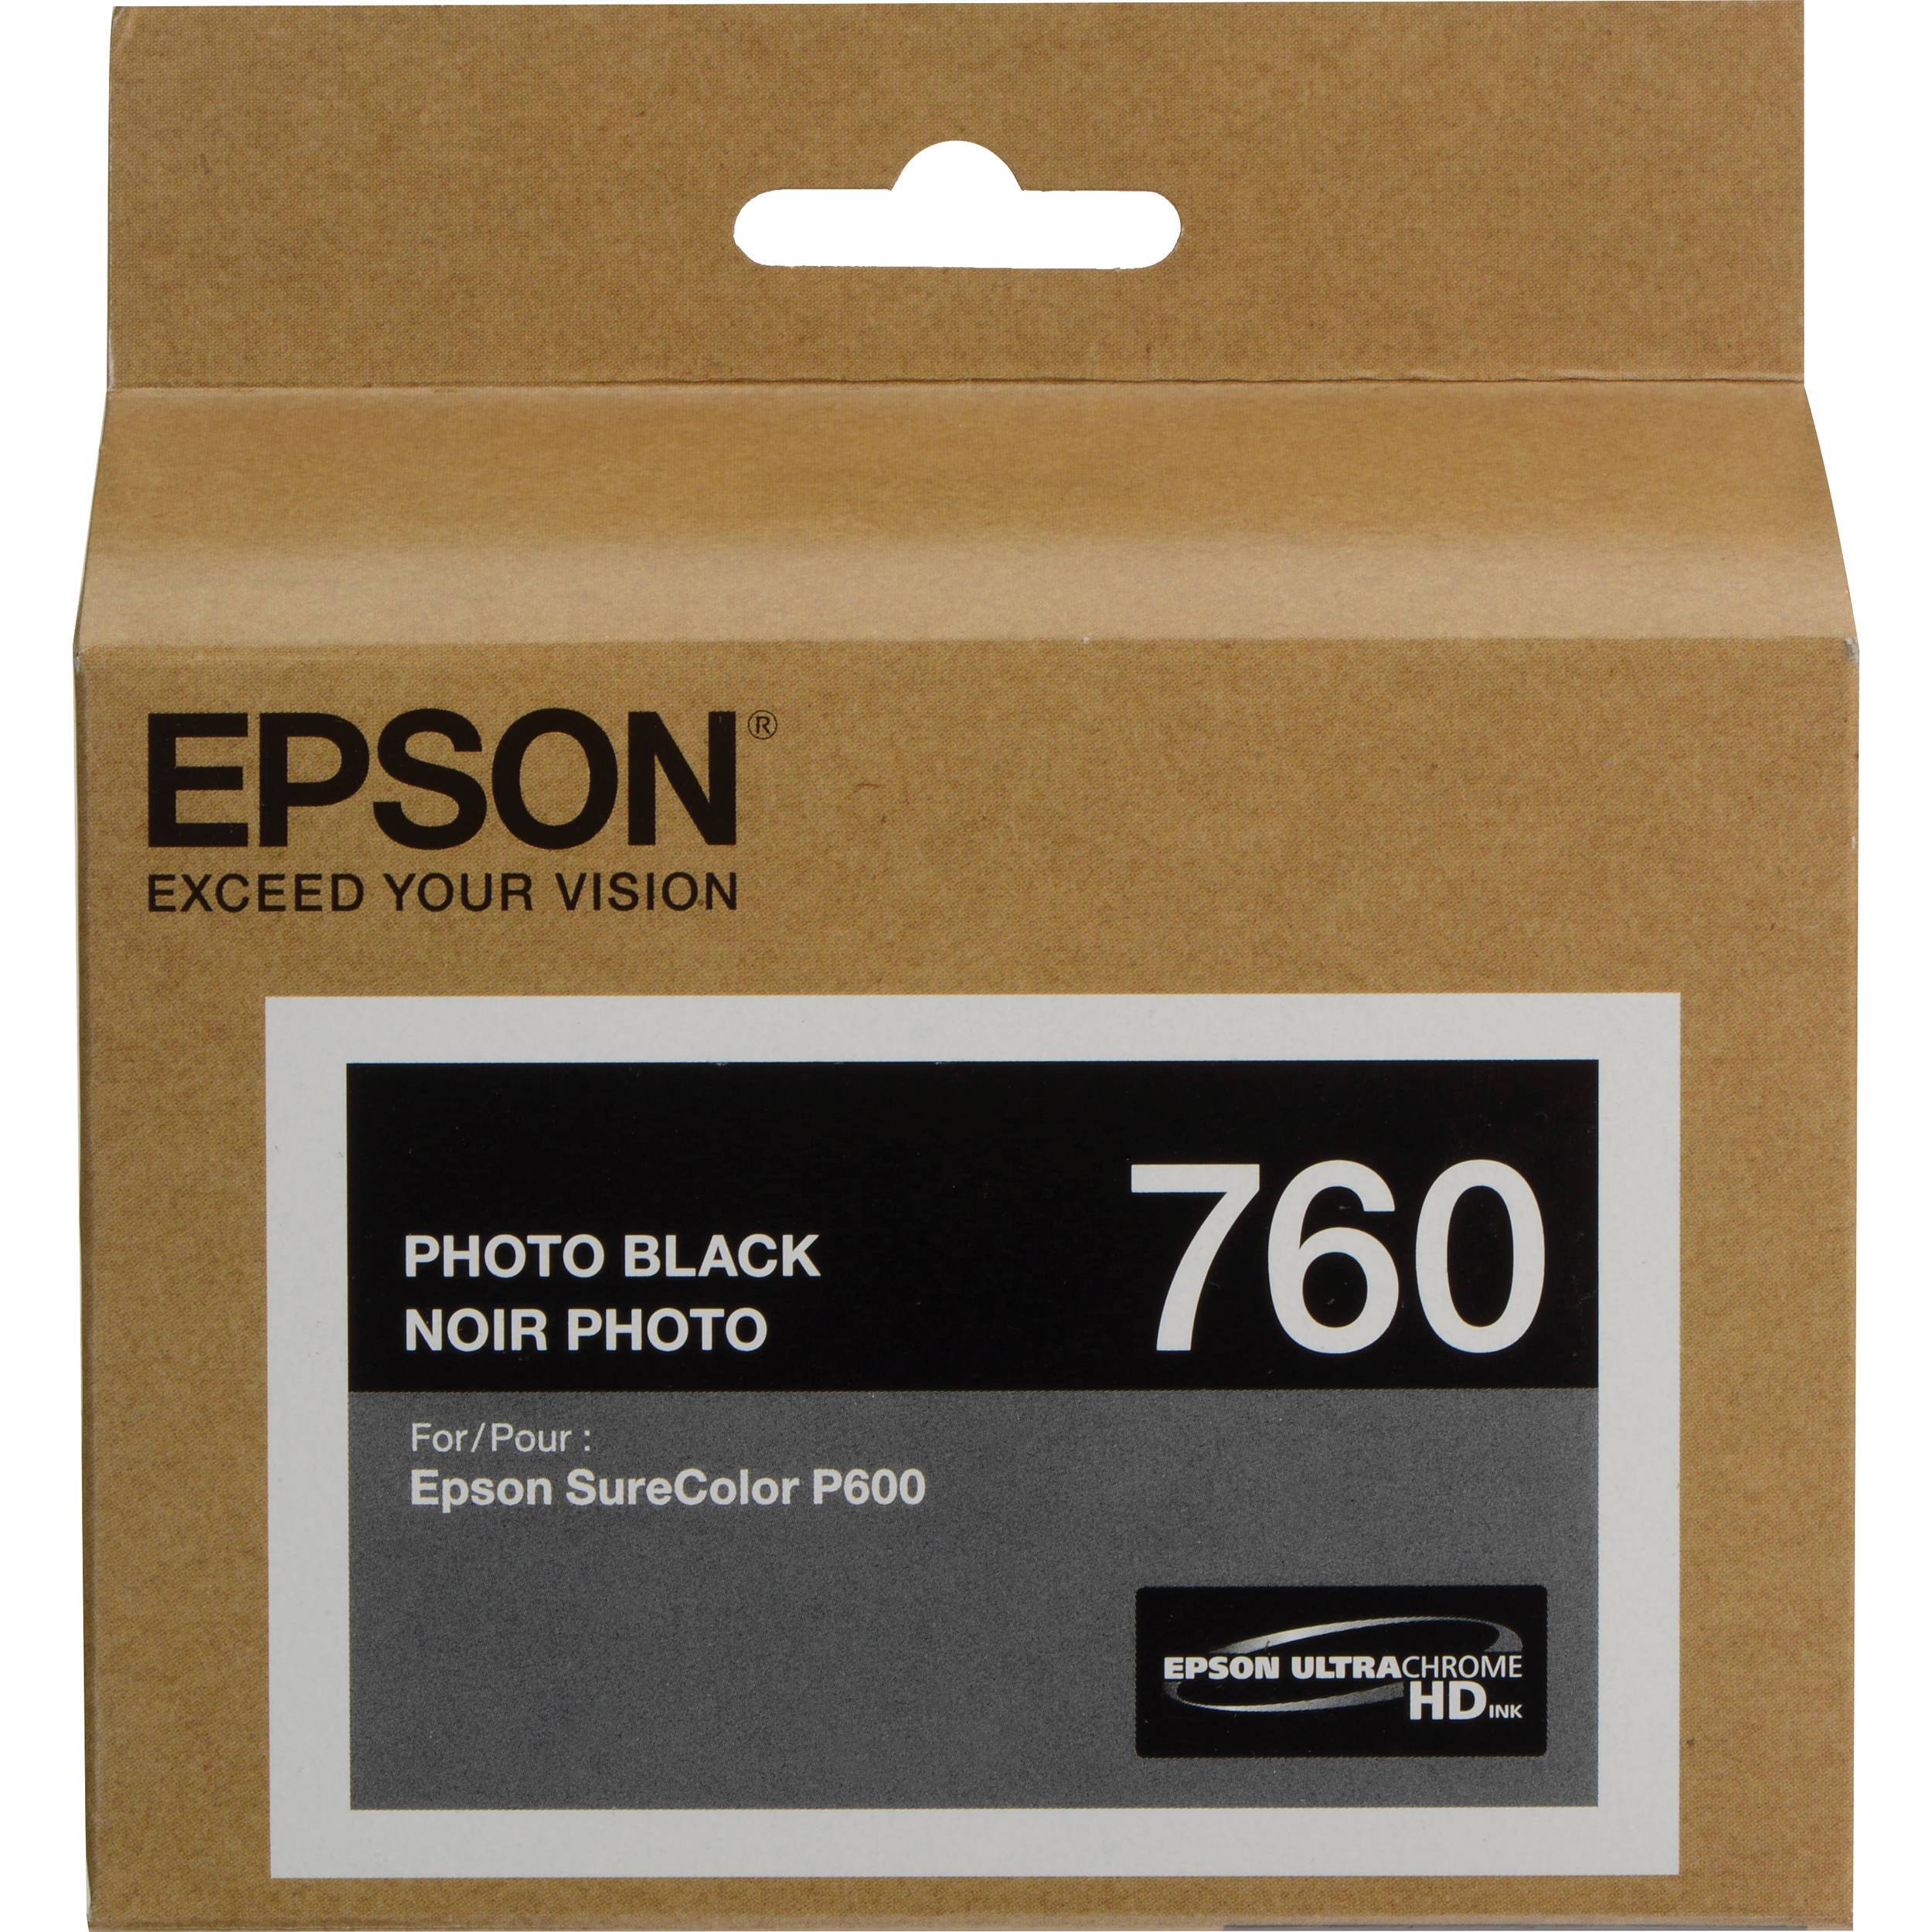 Absolute Toner Epson 760 Original Genuine OEM Black Ink Cartridge | T760120 Original Epson Cartridges